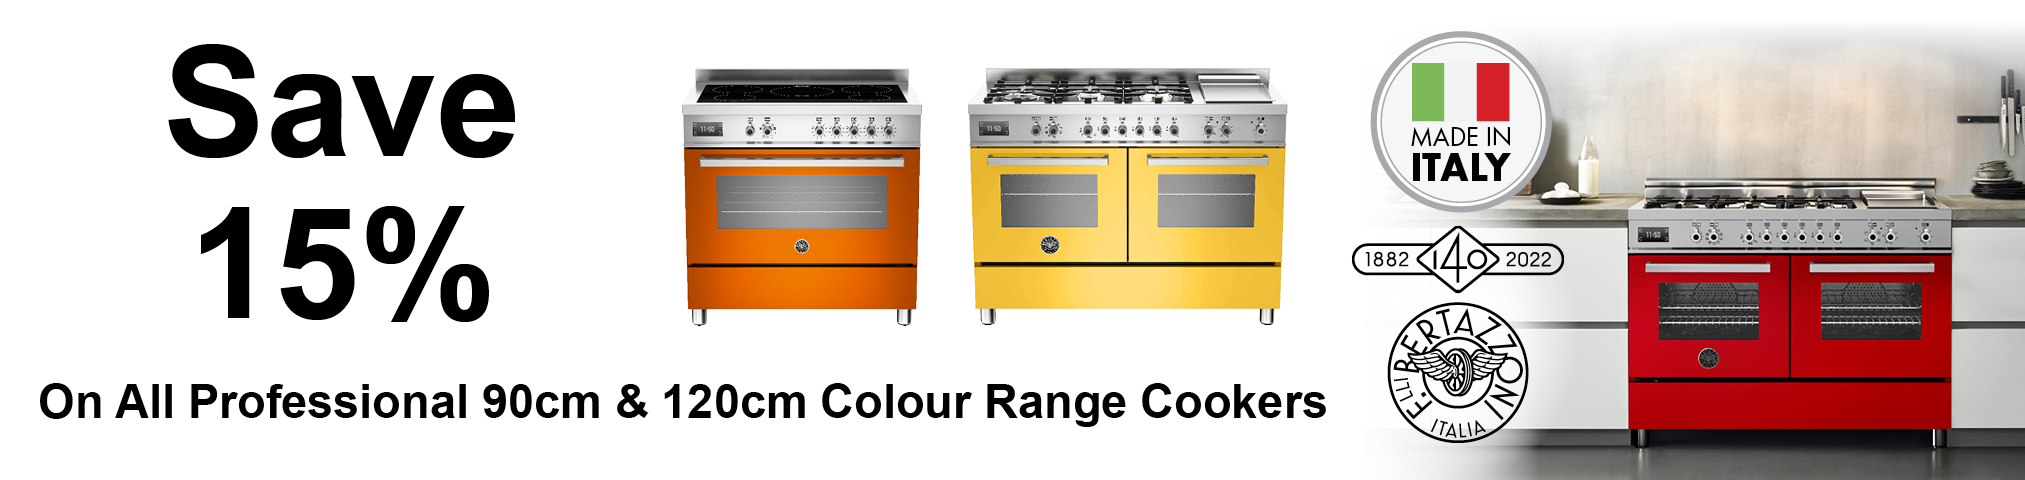 Save 15% on all Bertazzoni Professional 90cm & 120cm Colour Range Cookers